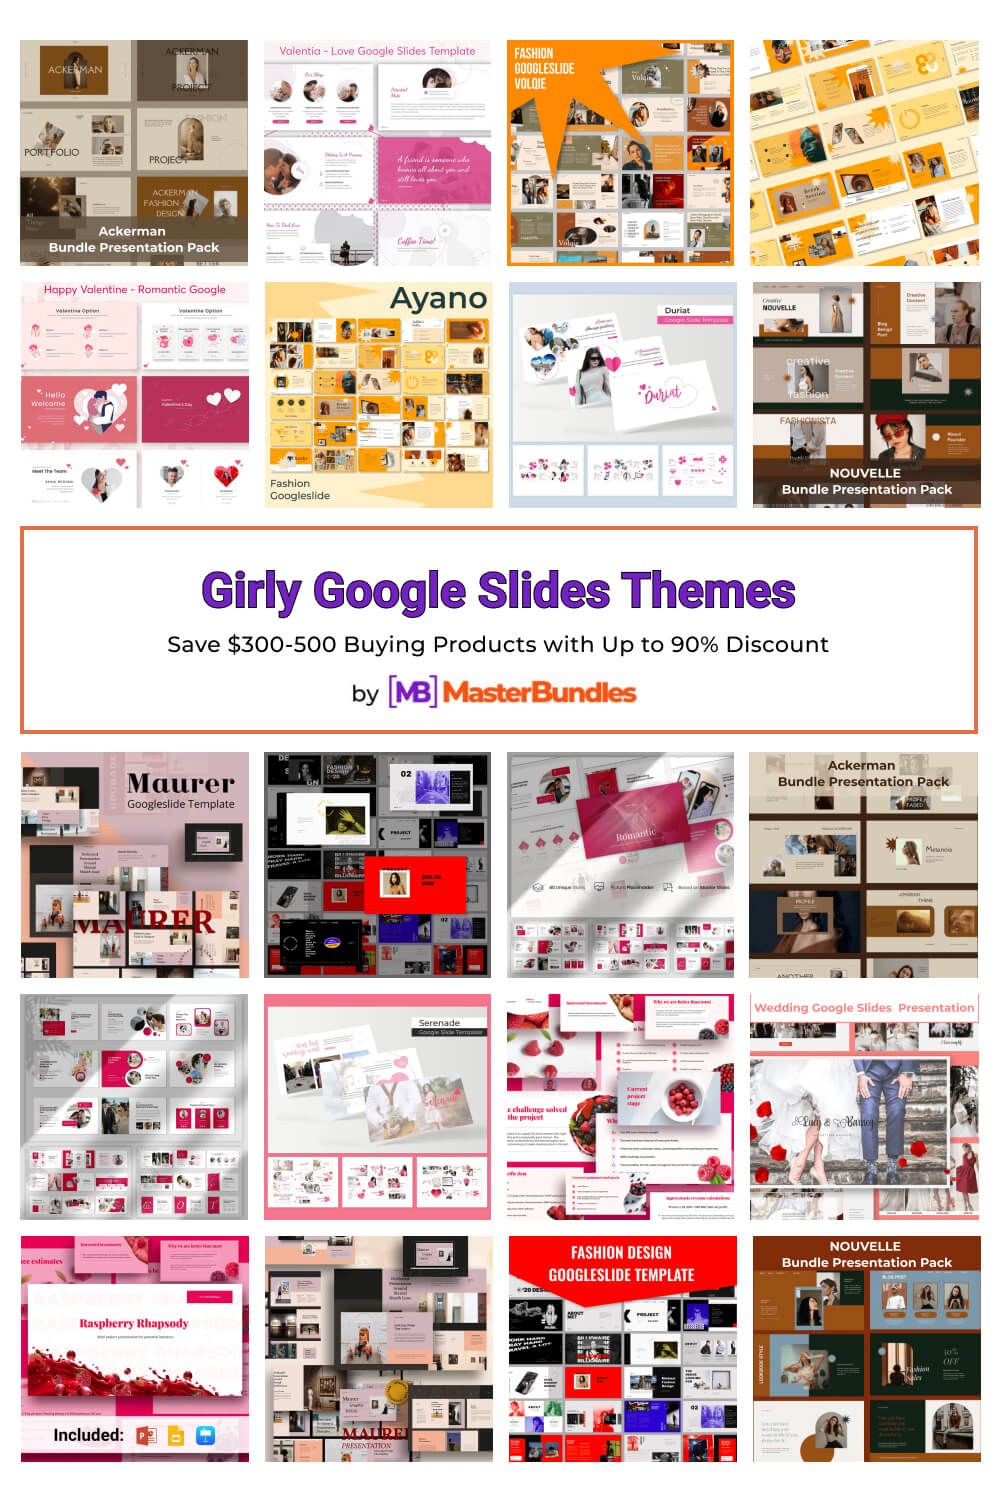 girly google slides themes pinterest image.